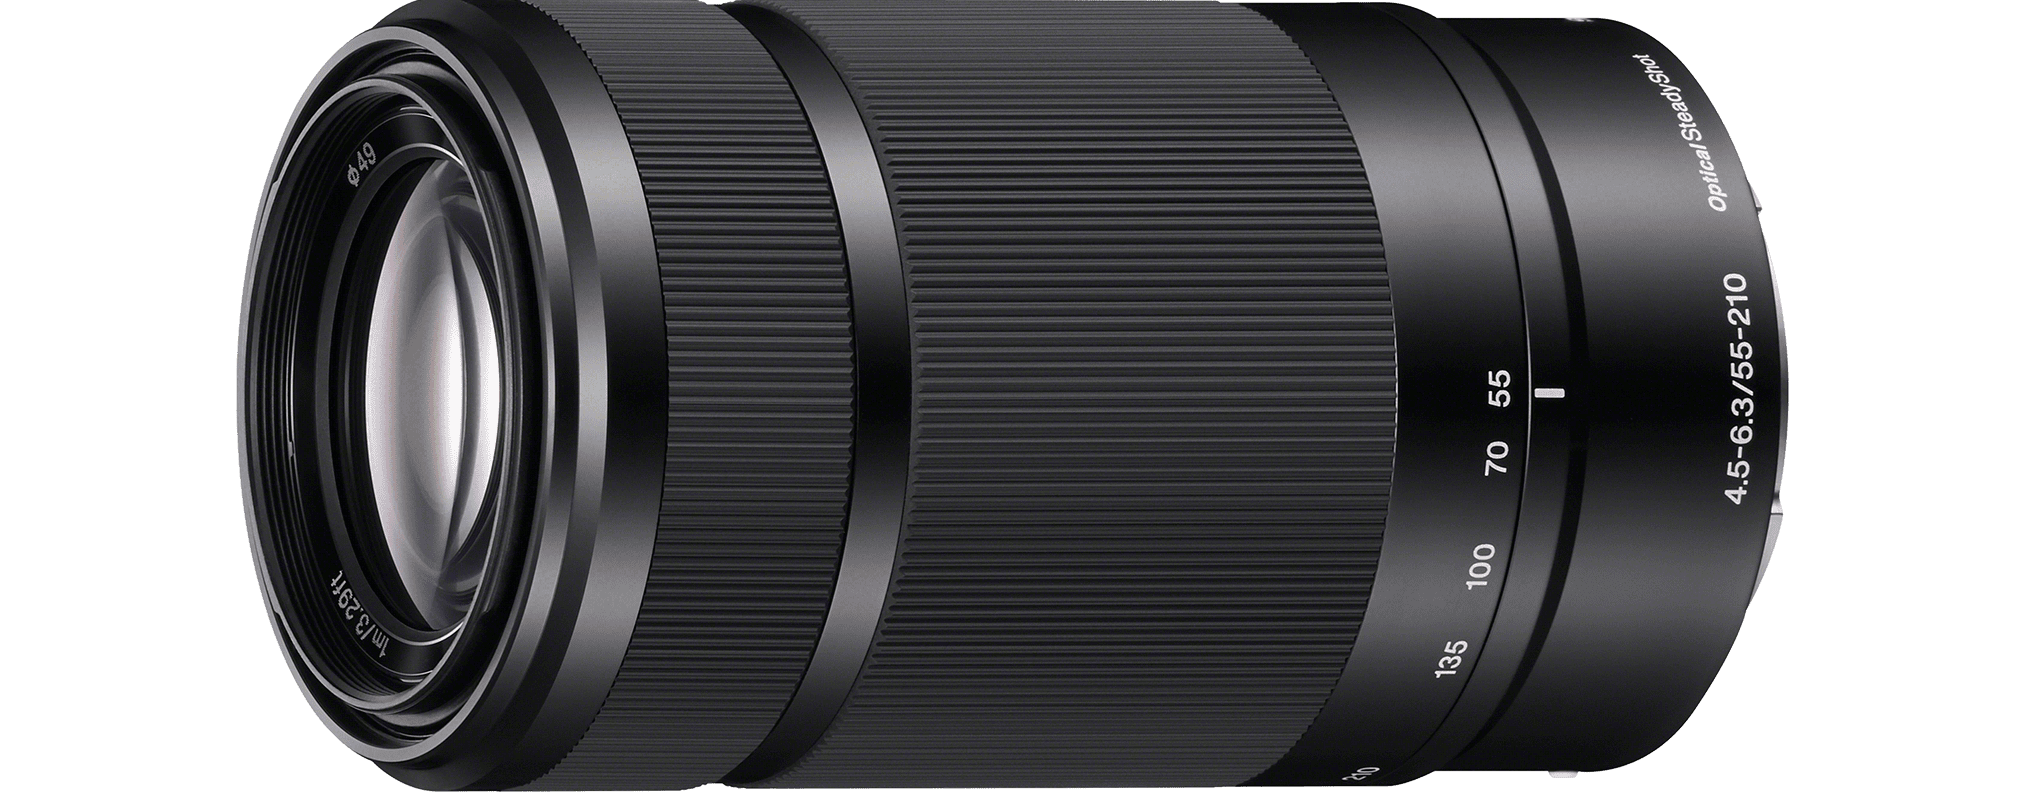 Sony 18-135mm F3.5-5.6 OSS APS-C E-Mount Zoom Lens Renewed 